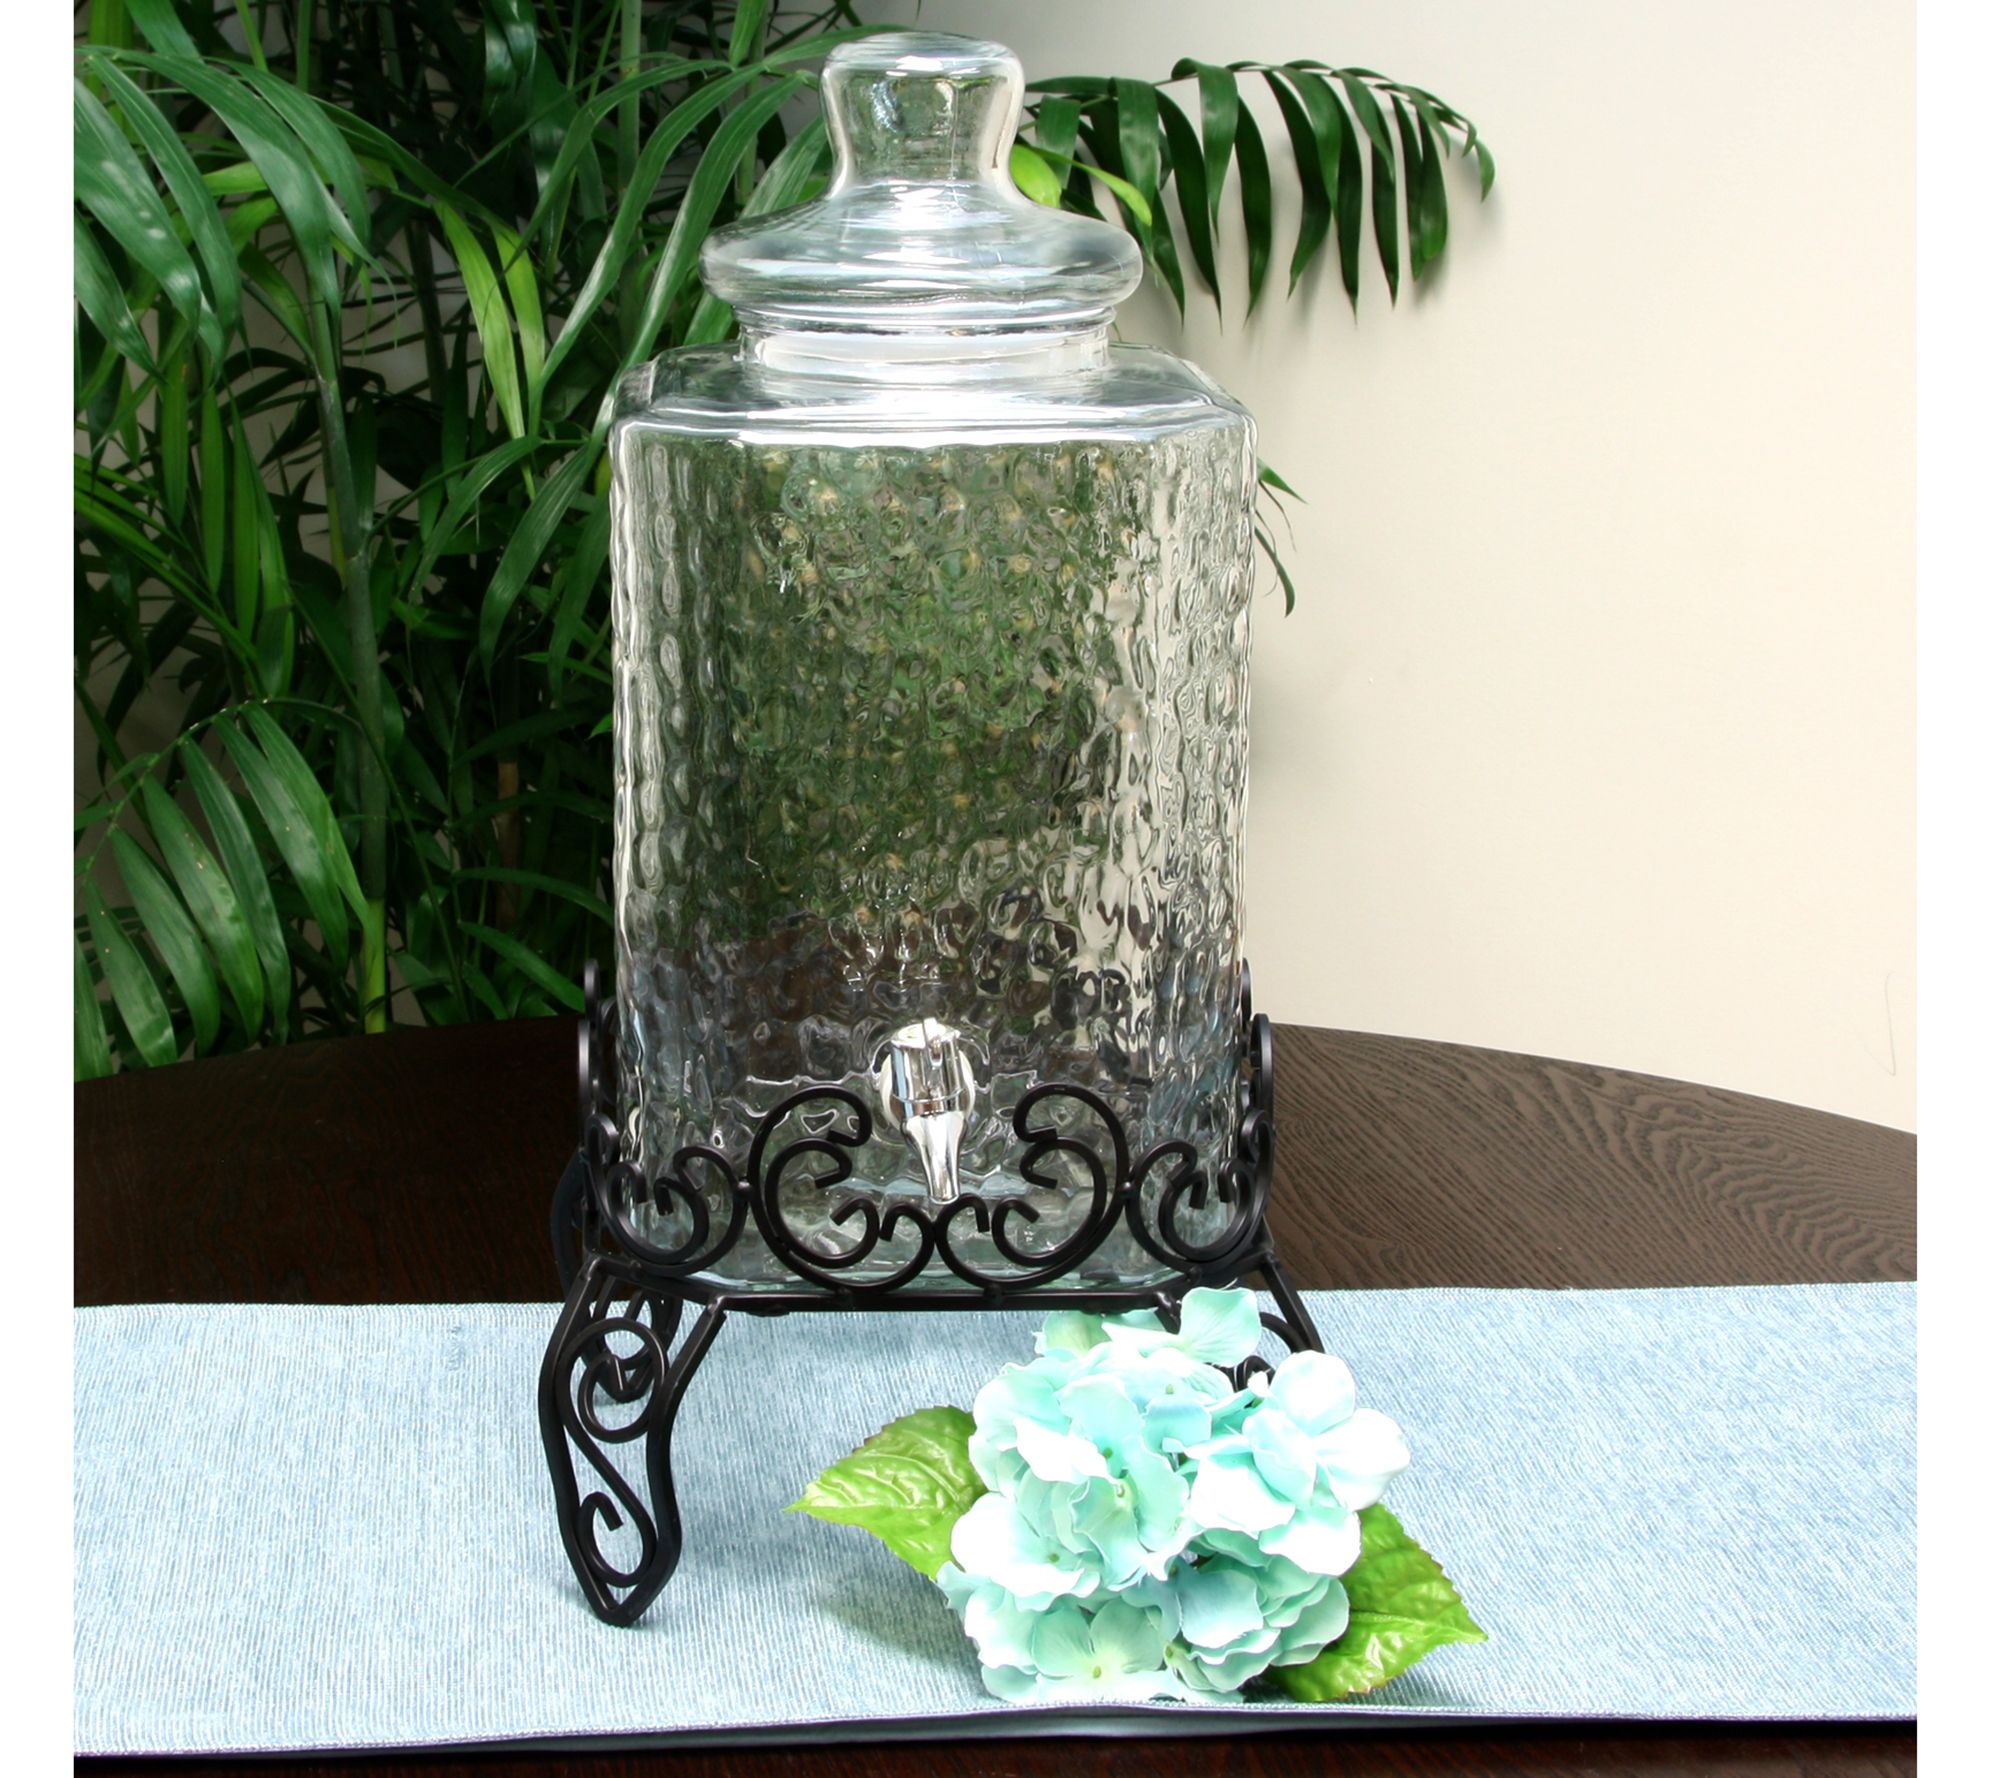 GIBSON HOME Chiara 2 Gallon Glass Mason Jar Dispenser with Metal